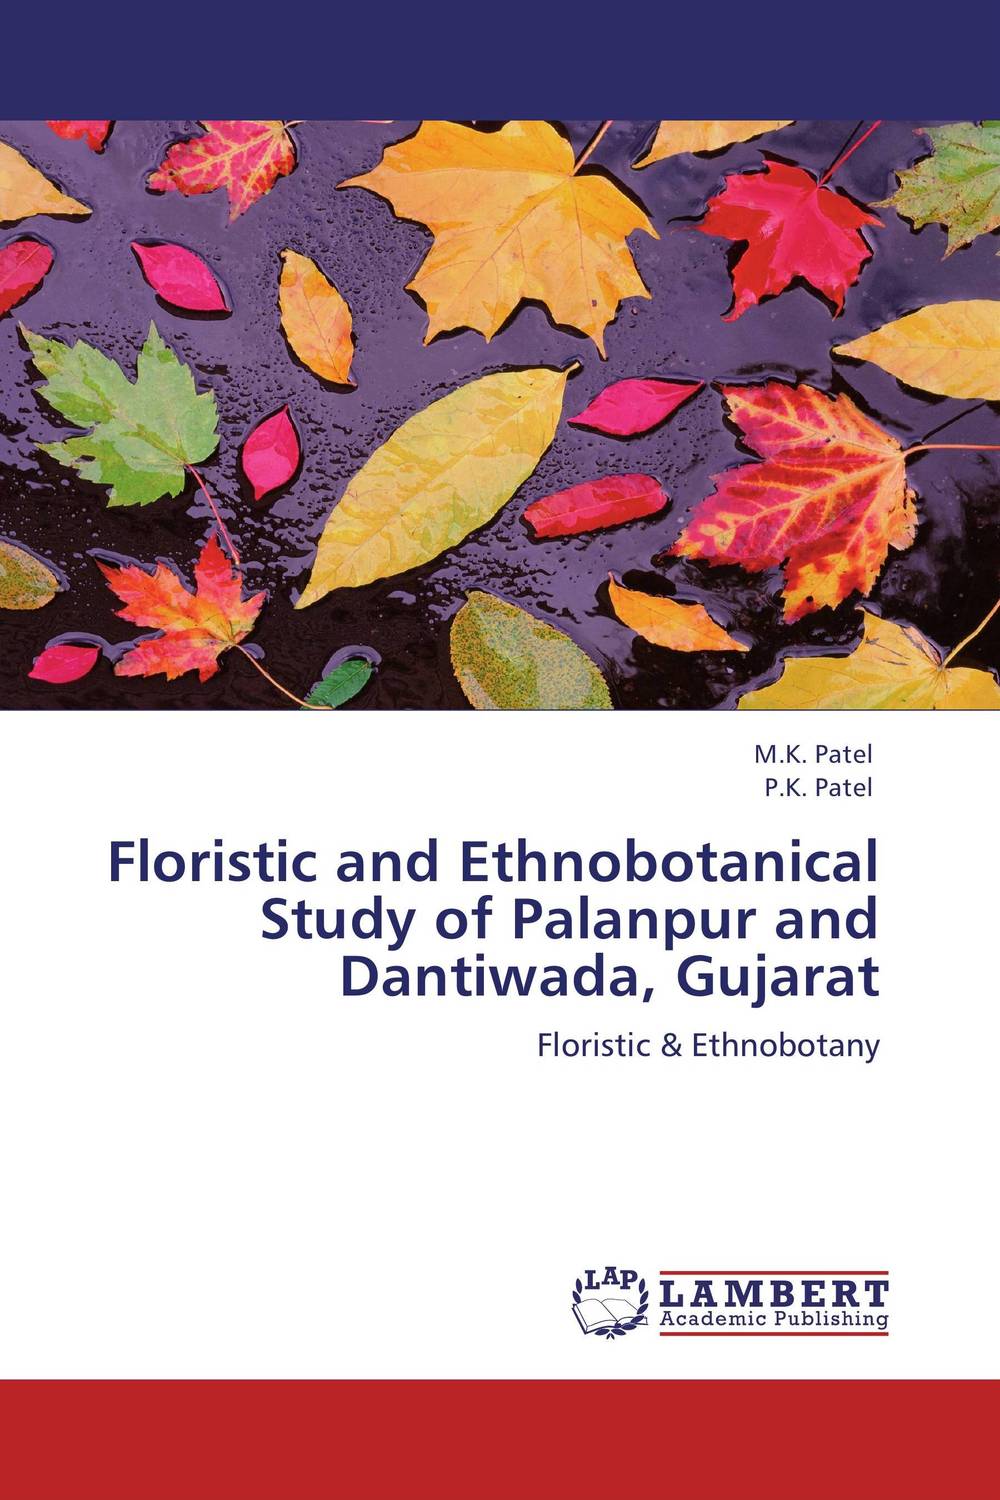 Floristic and Ethnobotanical Study of Palanpur and Dantiwada, Gujarat